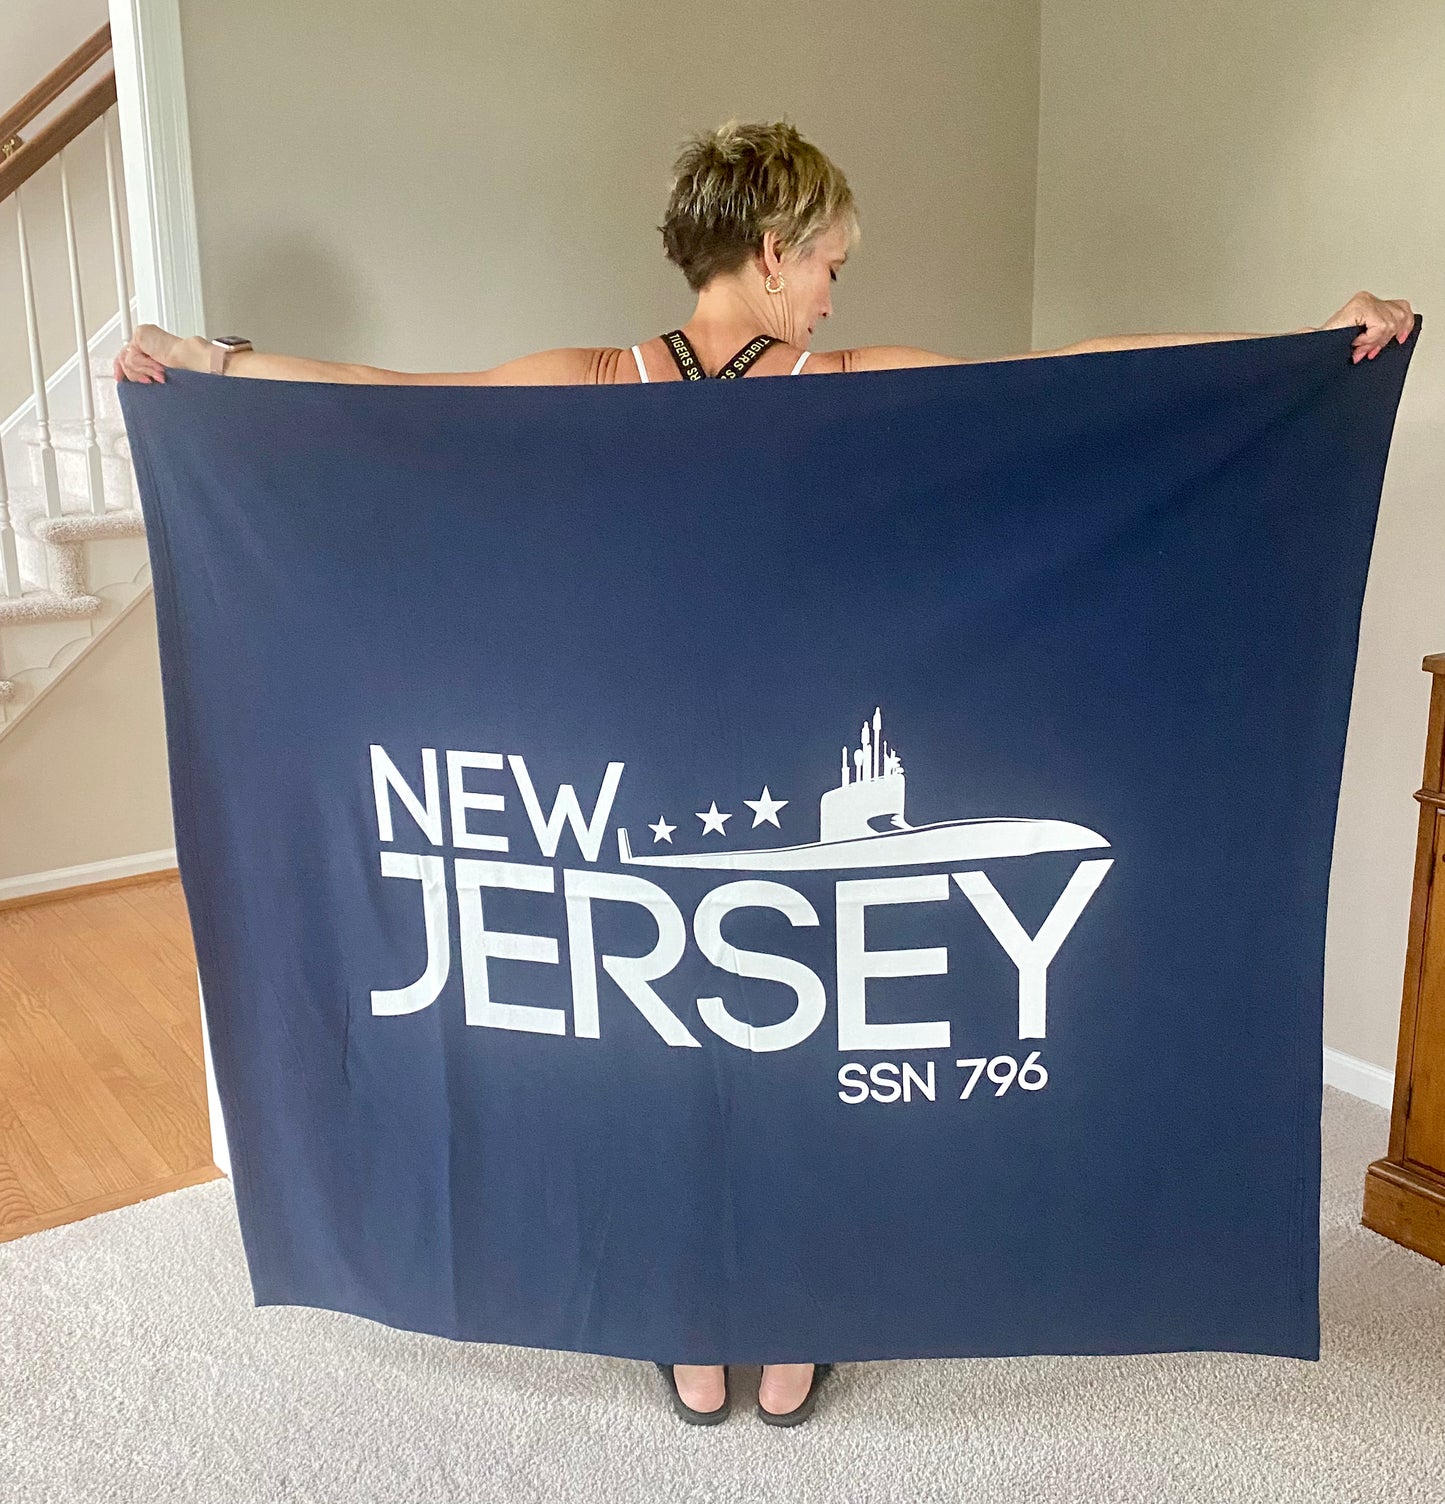 USS NEW JERSEY Sweatshirt Blanket